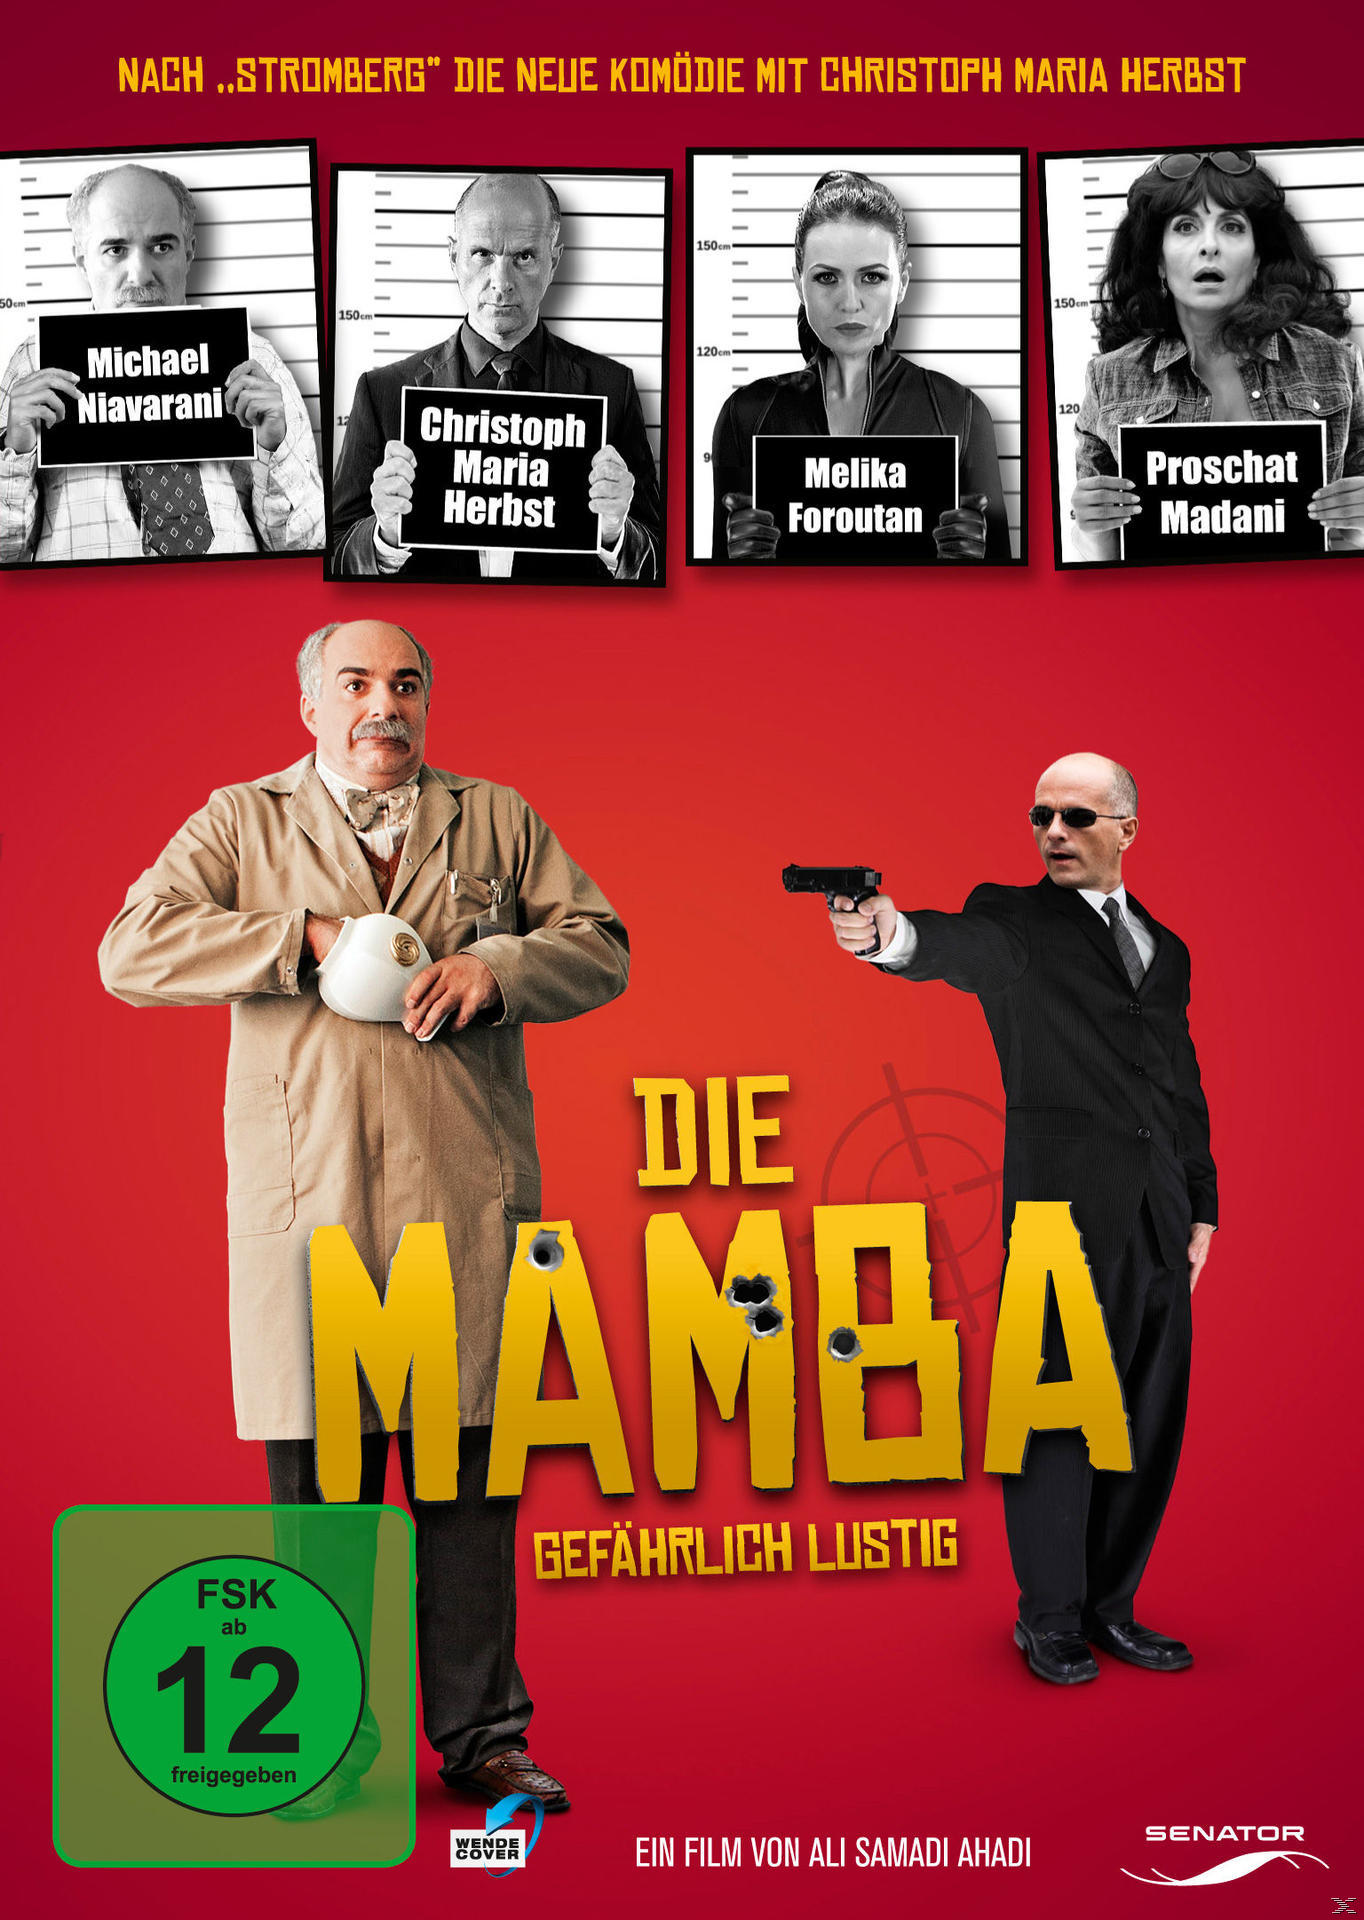 Die Mamba - Gefährlich Blu-ray lustig